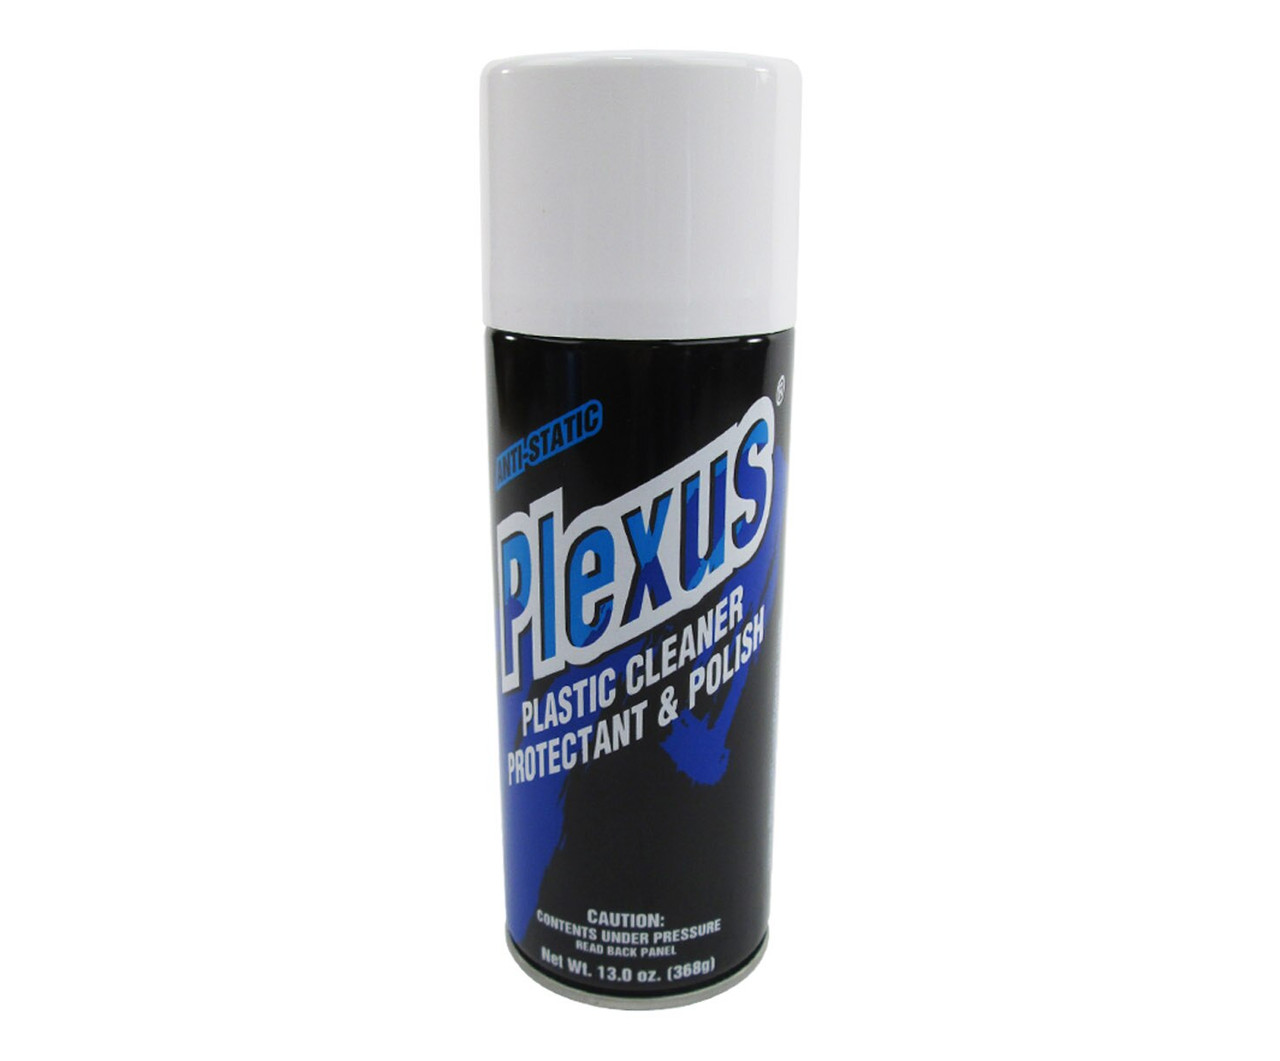 Plexus Plastic Cleaner Protectant & Polish - 13 oz Can - 20214